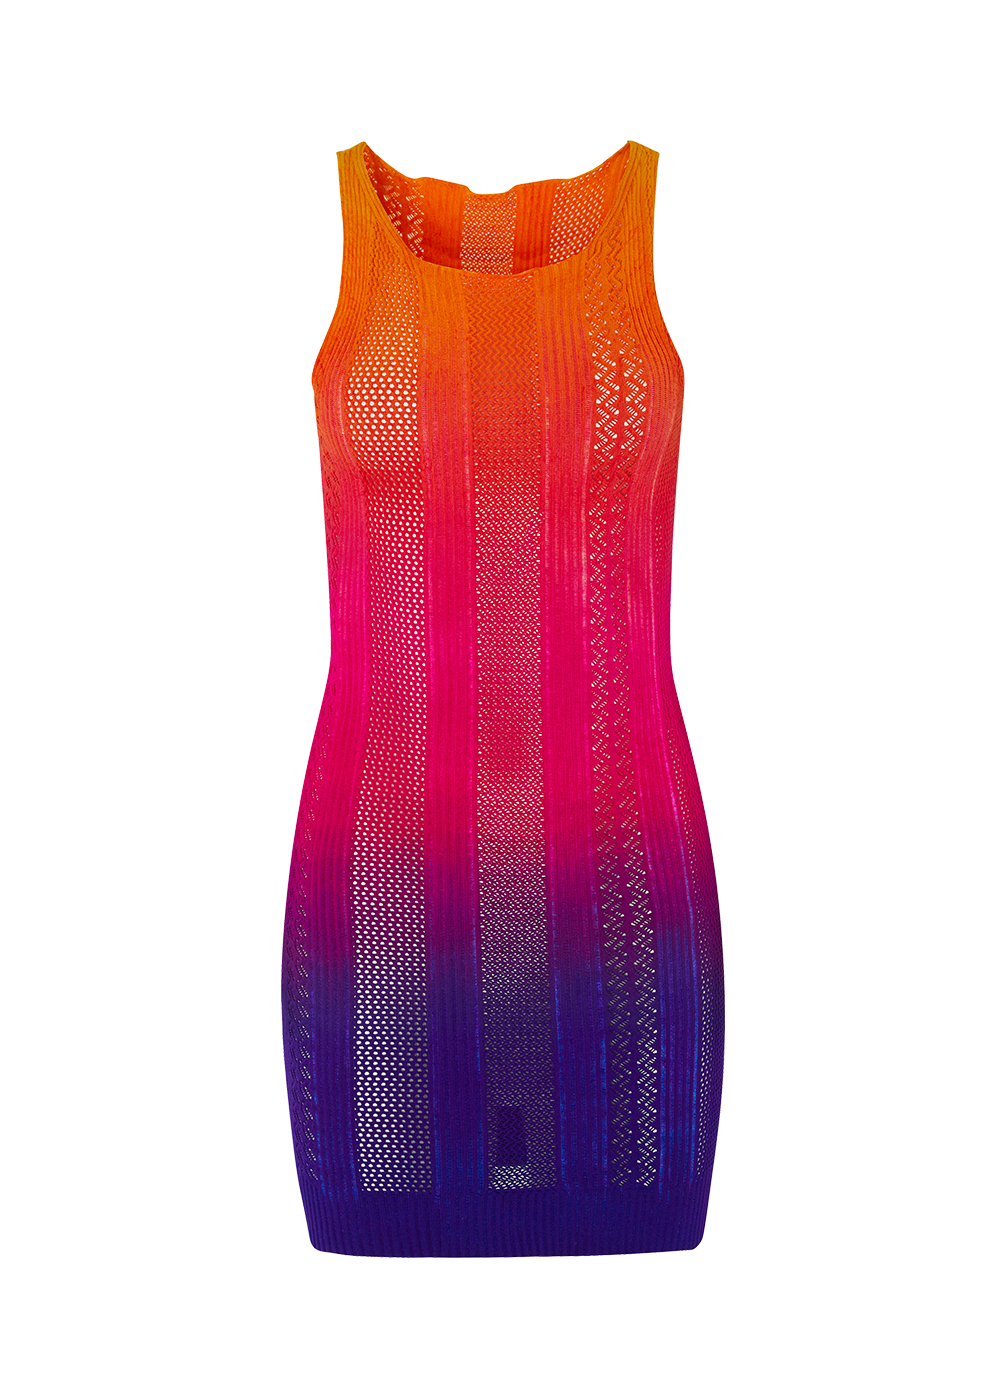 AGR - Colour Theory Elastic Tank Dress - Packshot - Front